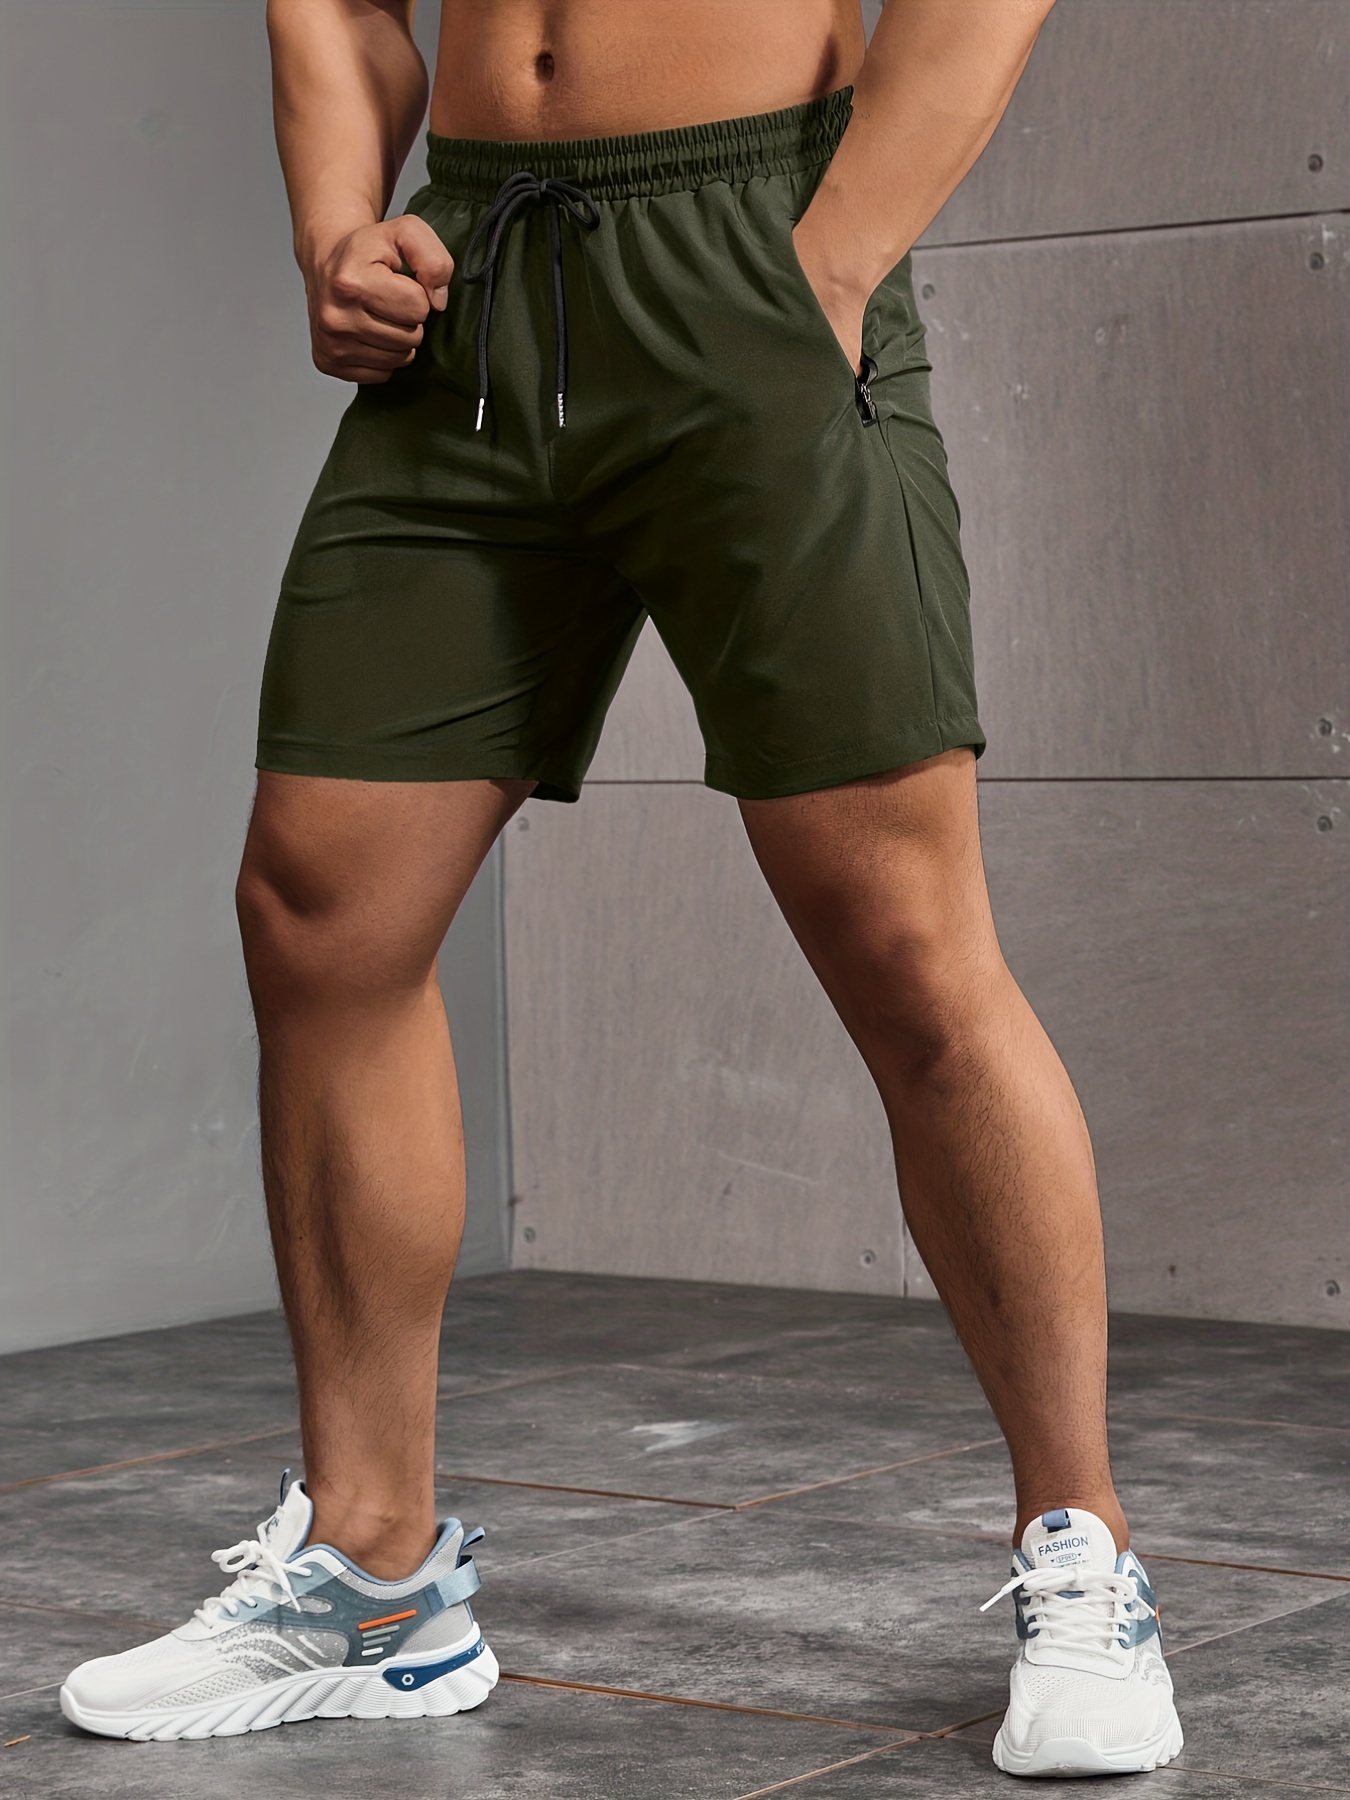 MO GOOD Mens Casual Shorts Workout Fashion Comfy Camo Shorts Breathable Big  and Tall Shorts : : Clothing, Shoes & Accessories